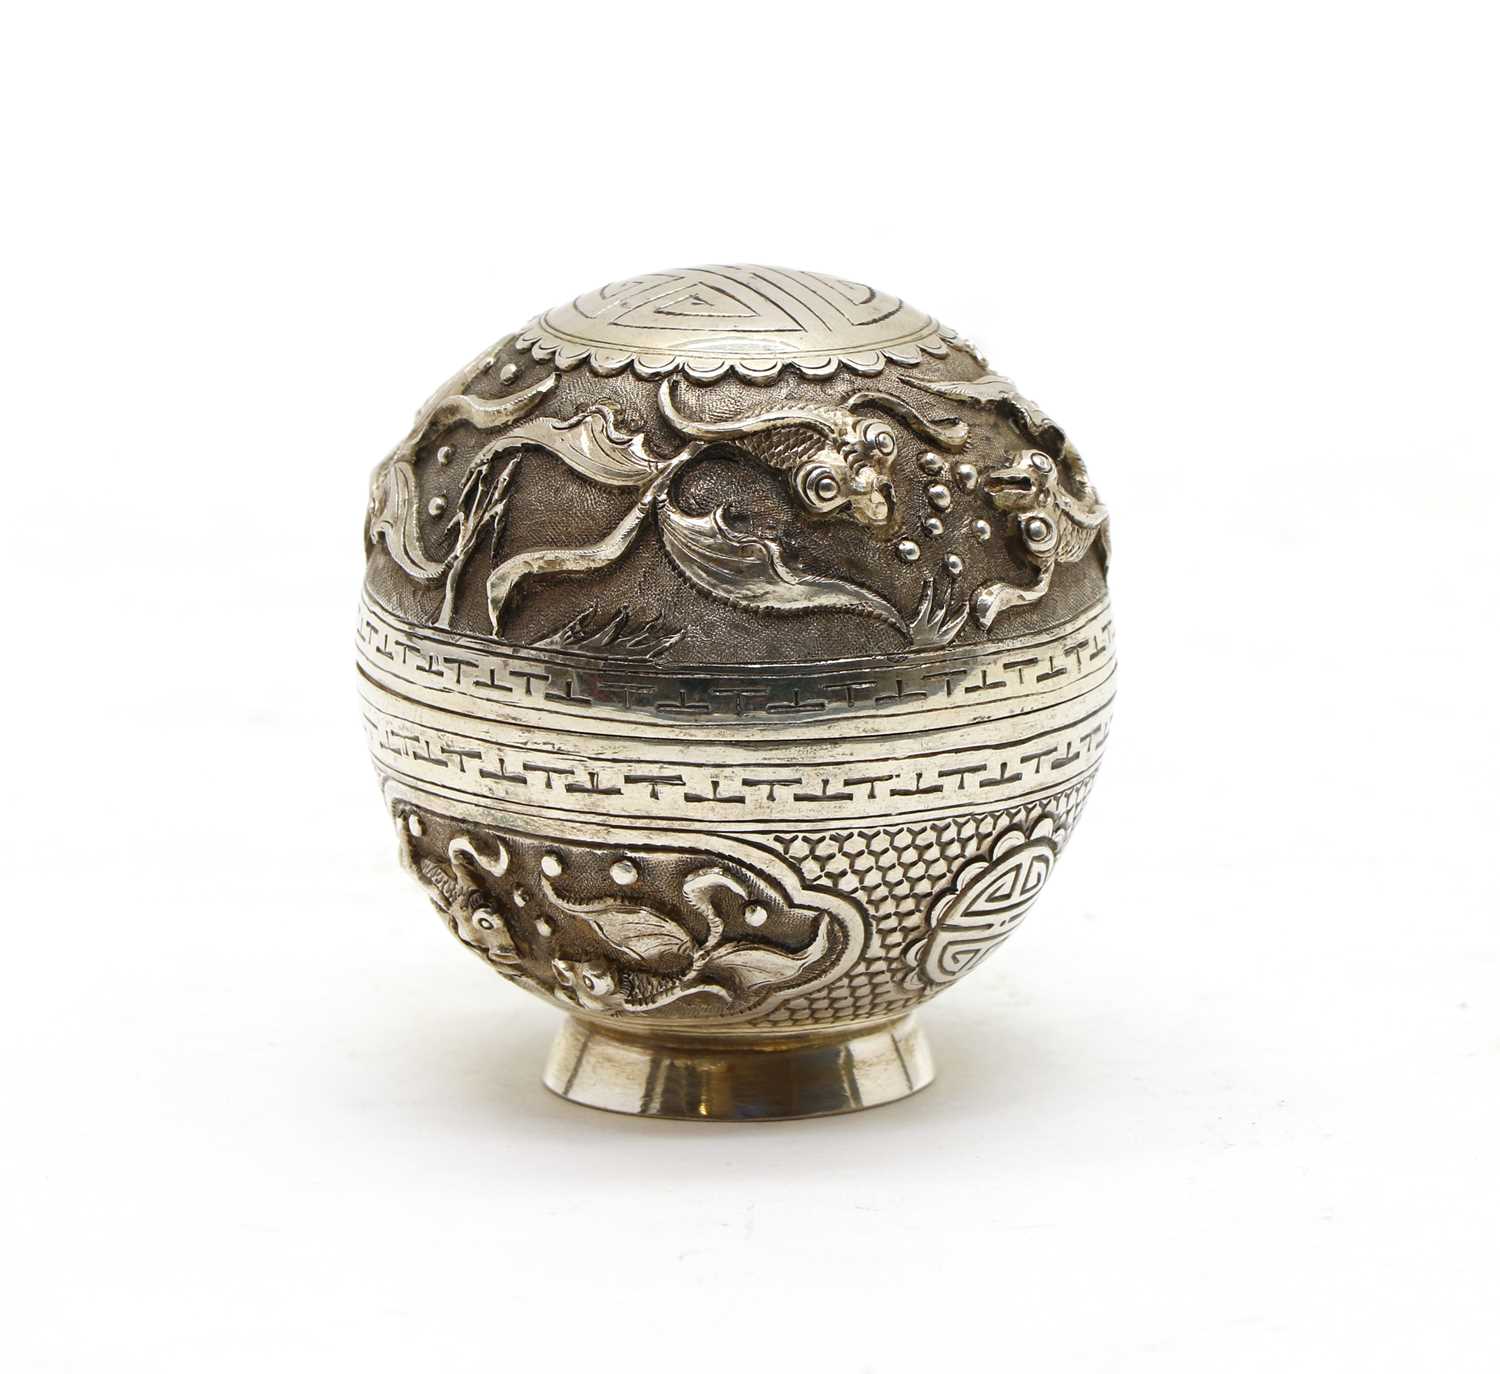 Lot 50 - A small globular shaped antique Chinese silver box